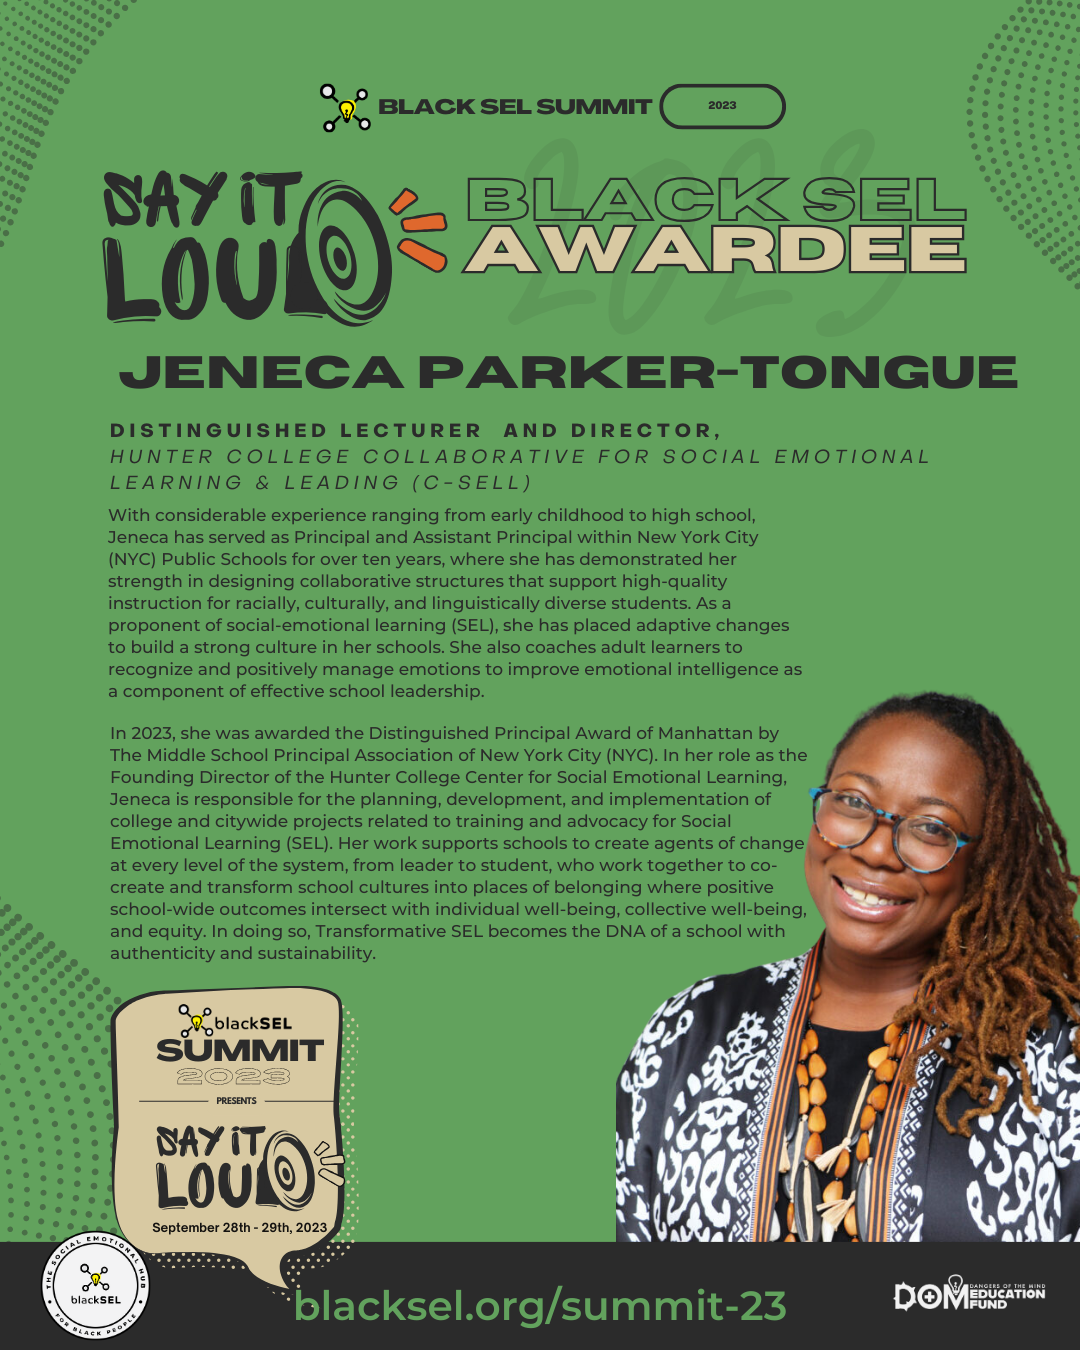 Jeneca Parker-Tongue (1)